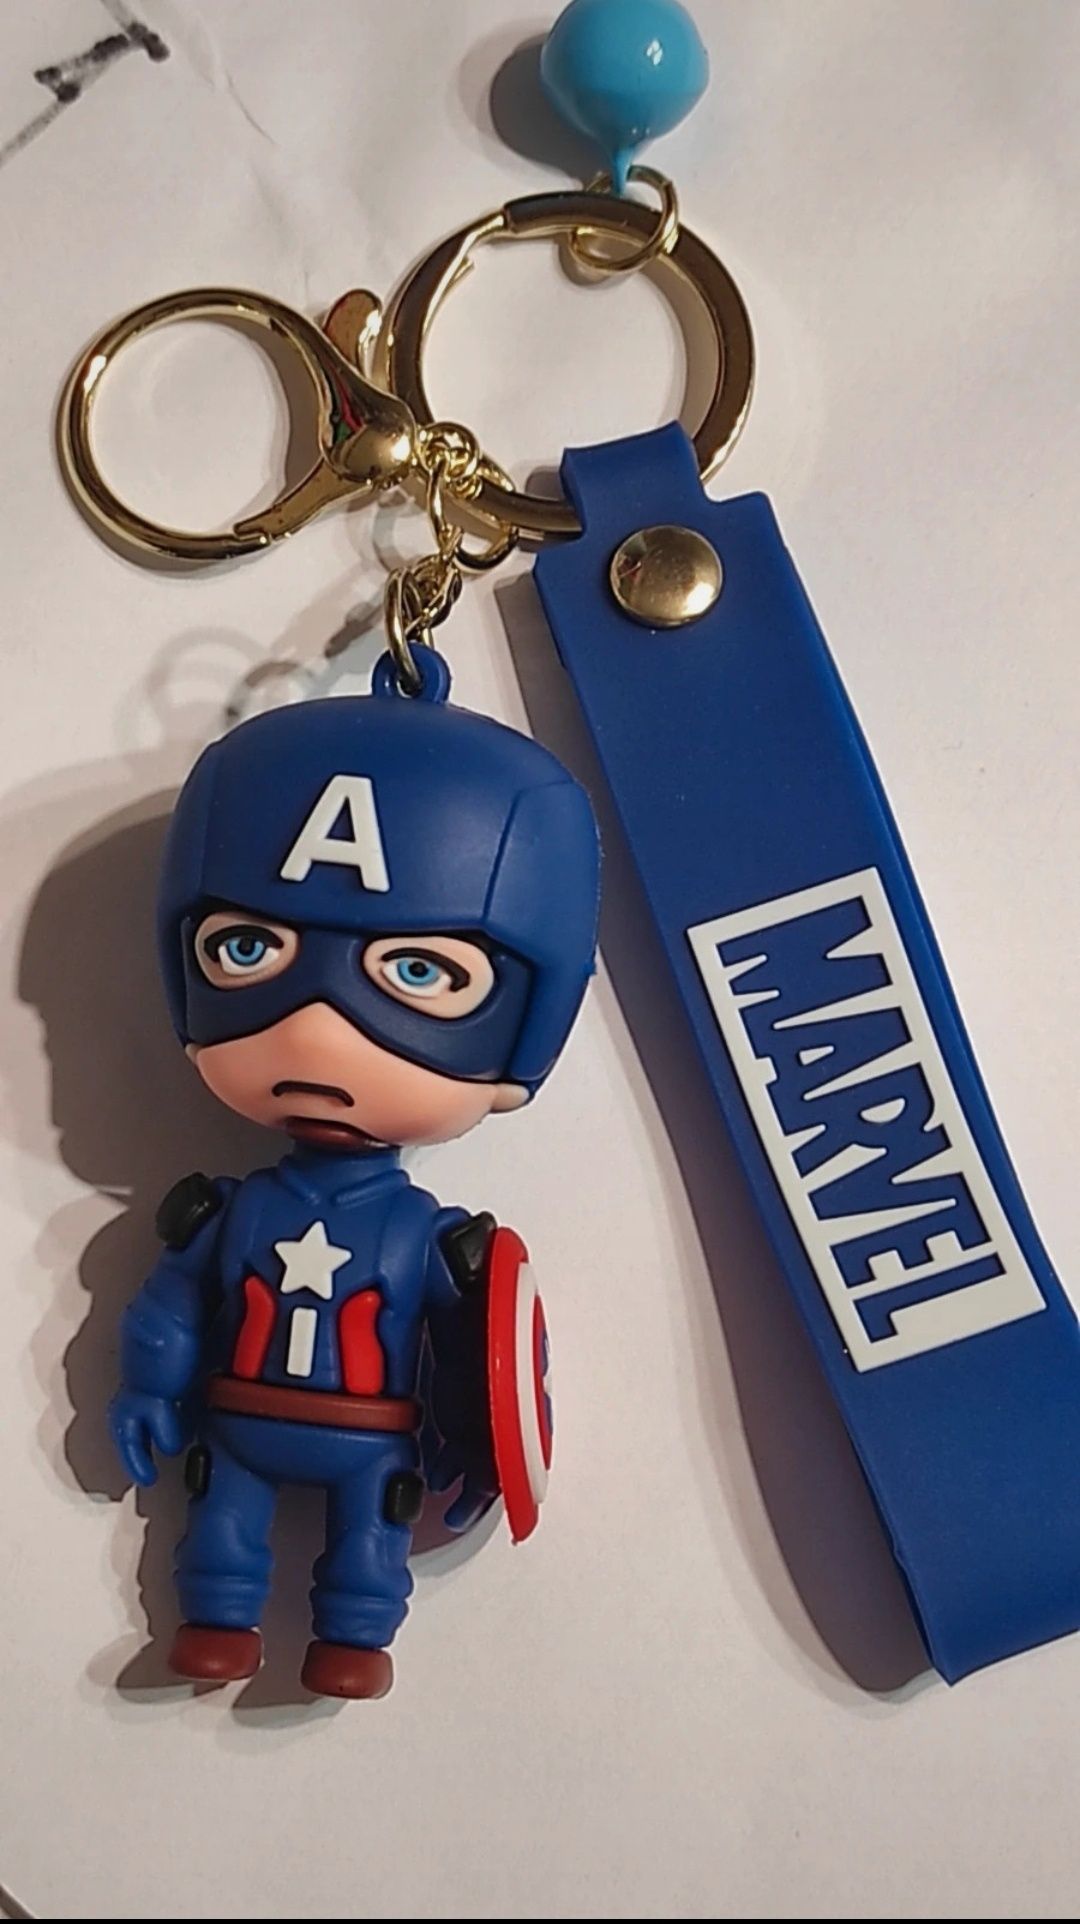 Figurka Brelok Kapitan Ameryka / Captain America - piękna i kolorowa